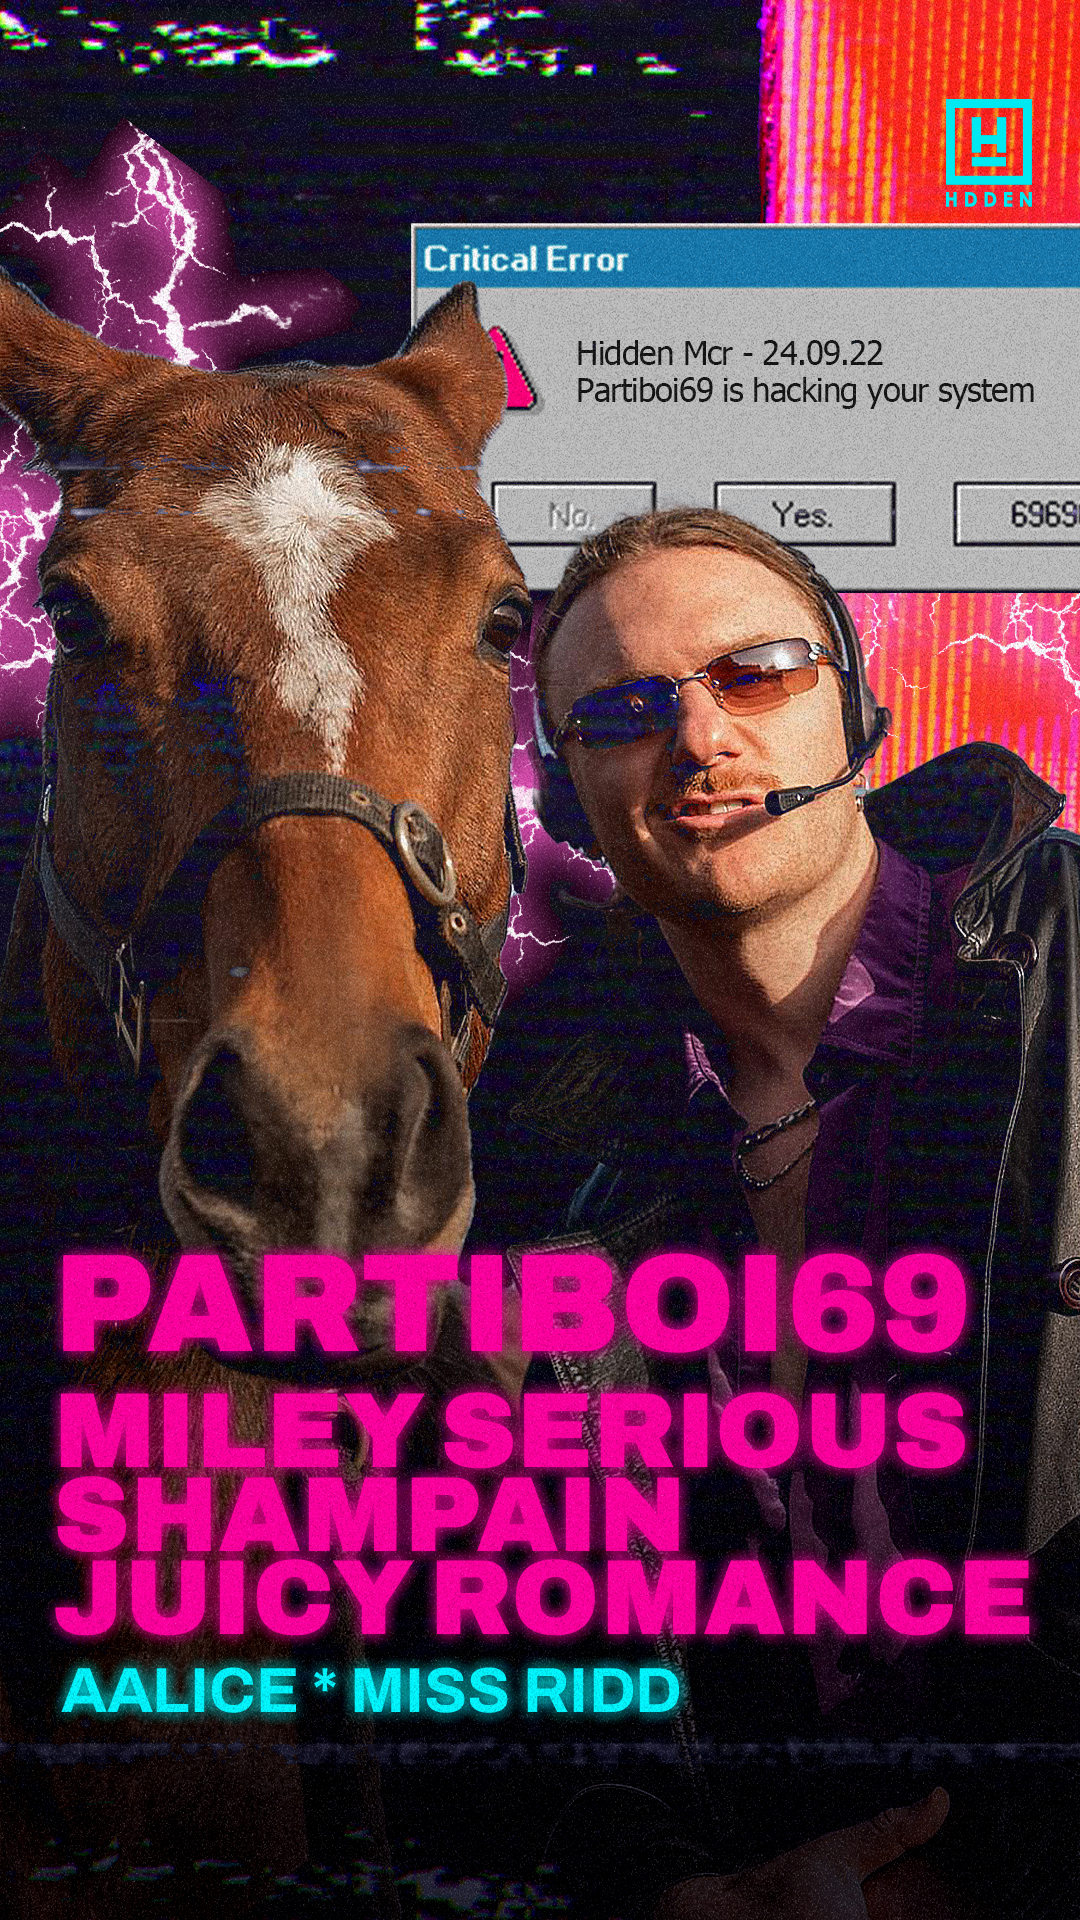 Partiboi69, Miley Serious, Shampain, Juicy Romance - Flyer front